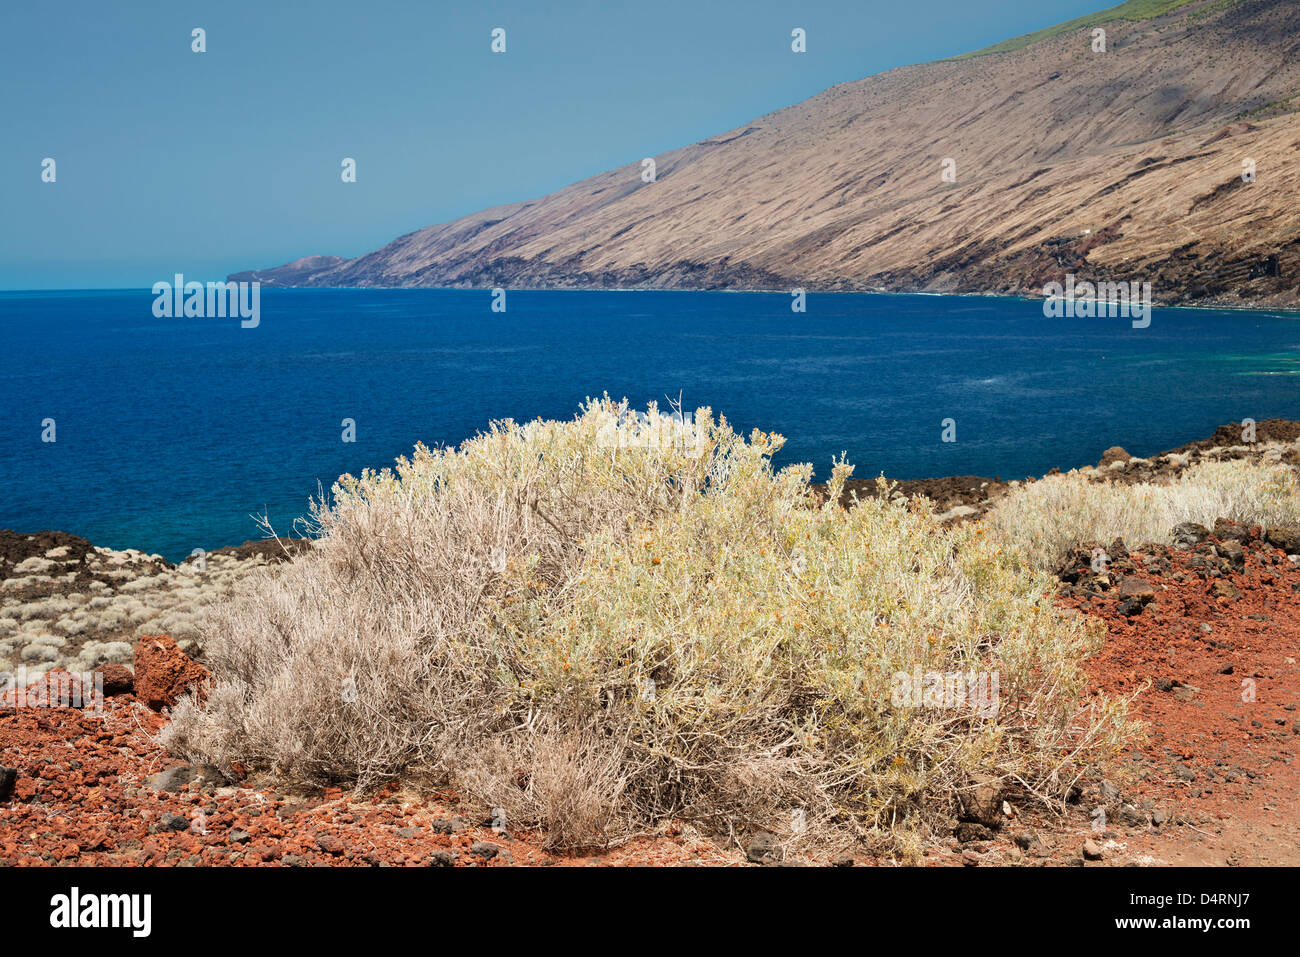 Salado cresce a Tacoron, El Hierro, Isole Canarie, con la lava-coperto crollo embayment di El Julan in background Foto Stock